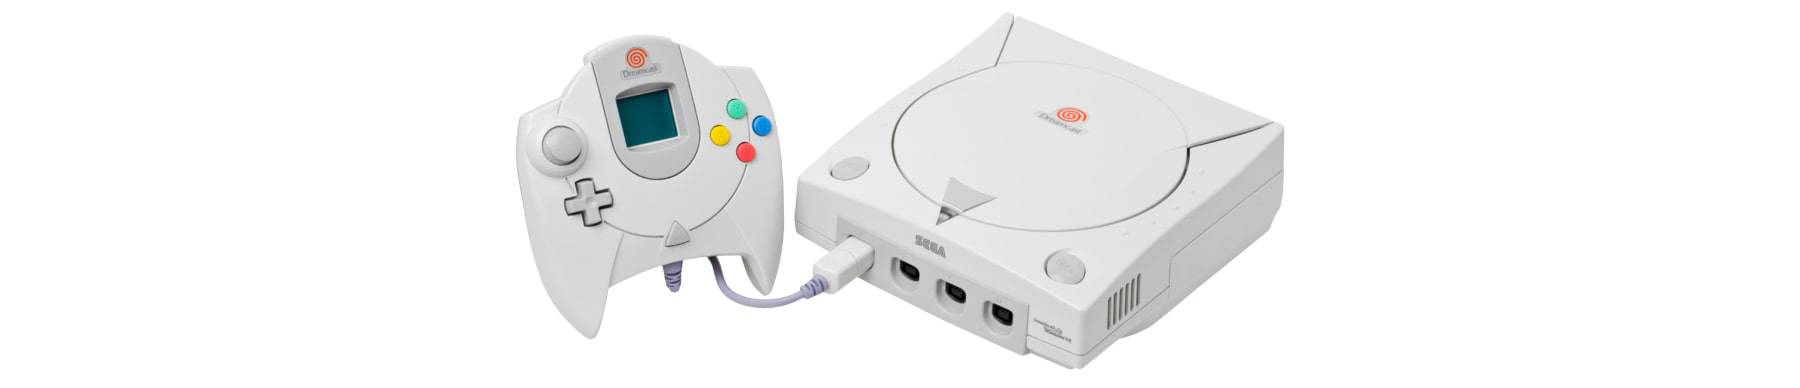 Sega's Dreamcast gaming console